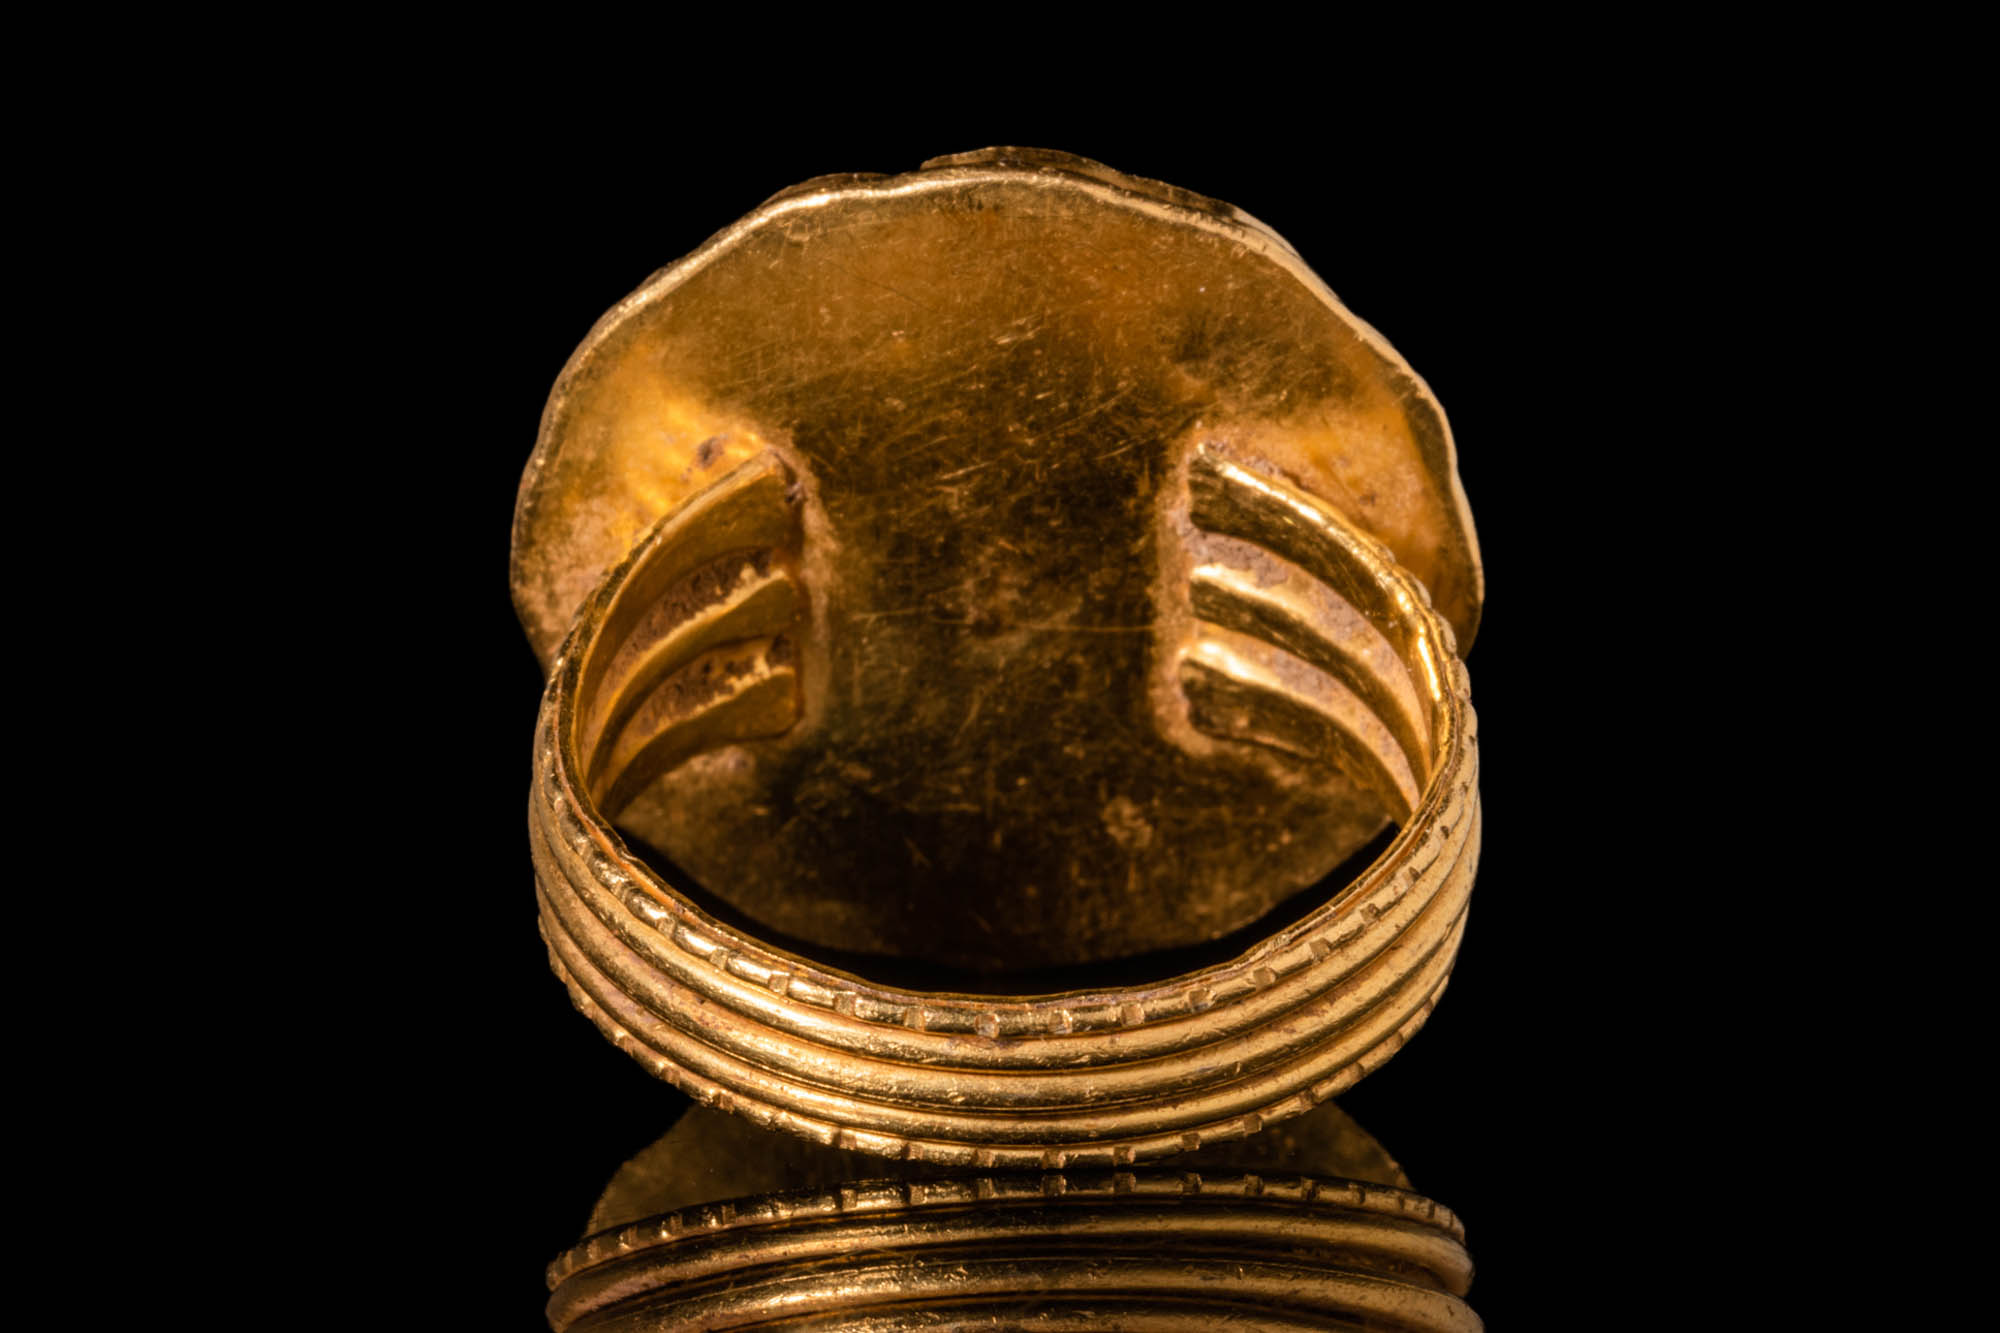 MEROVINGIAN GOLD RING WITH ROSETTE SHAPED BEZEL - Image 4 of 5